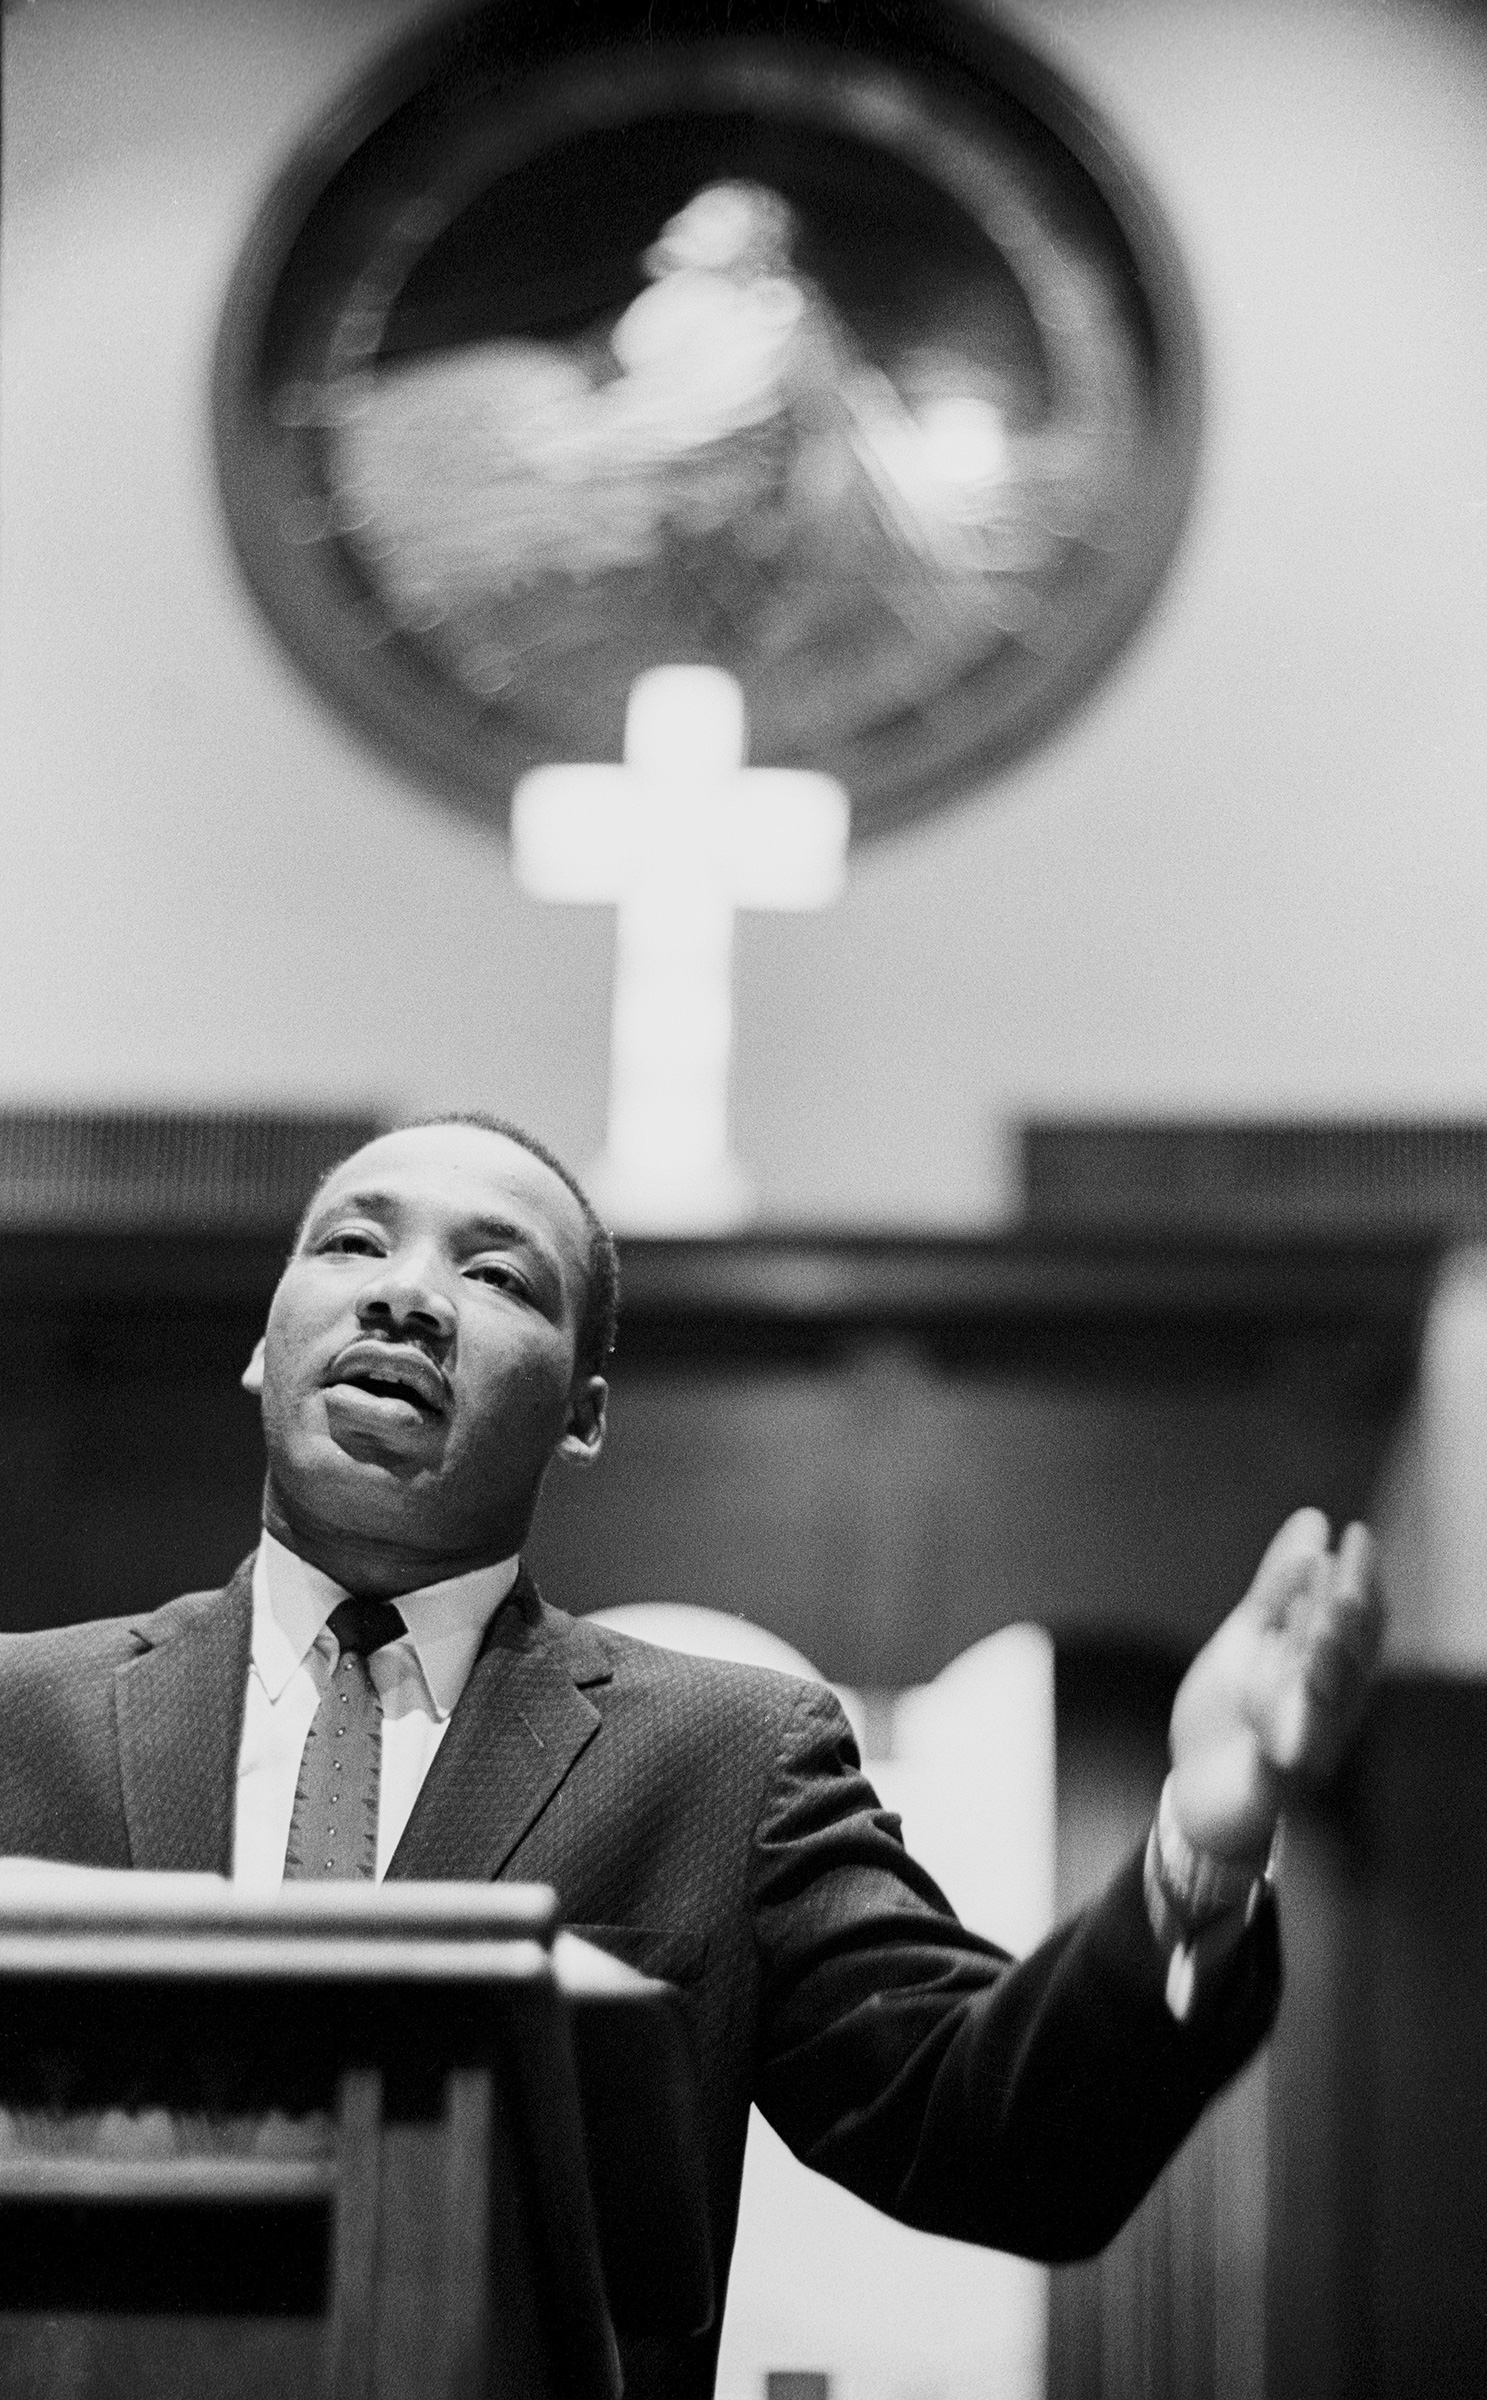 Dr. Martin Luther King Jr. preaching at the Ebenezer Baptist Church in Atlanta, circa 1960.